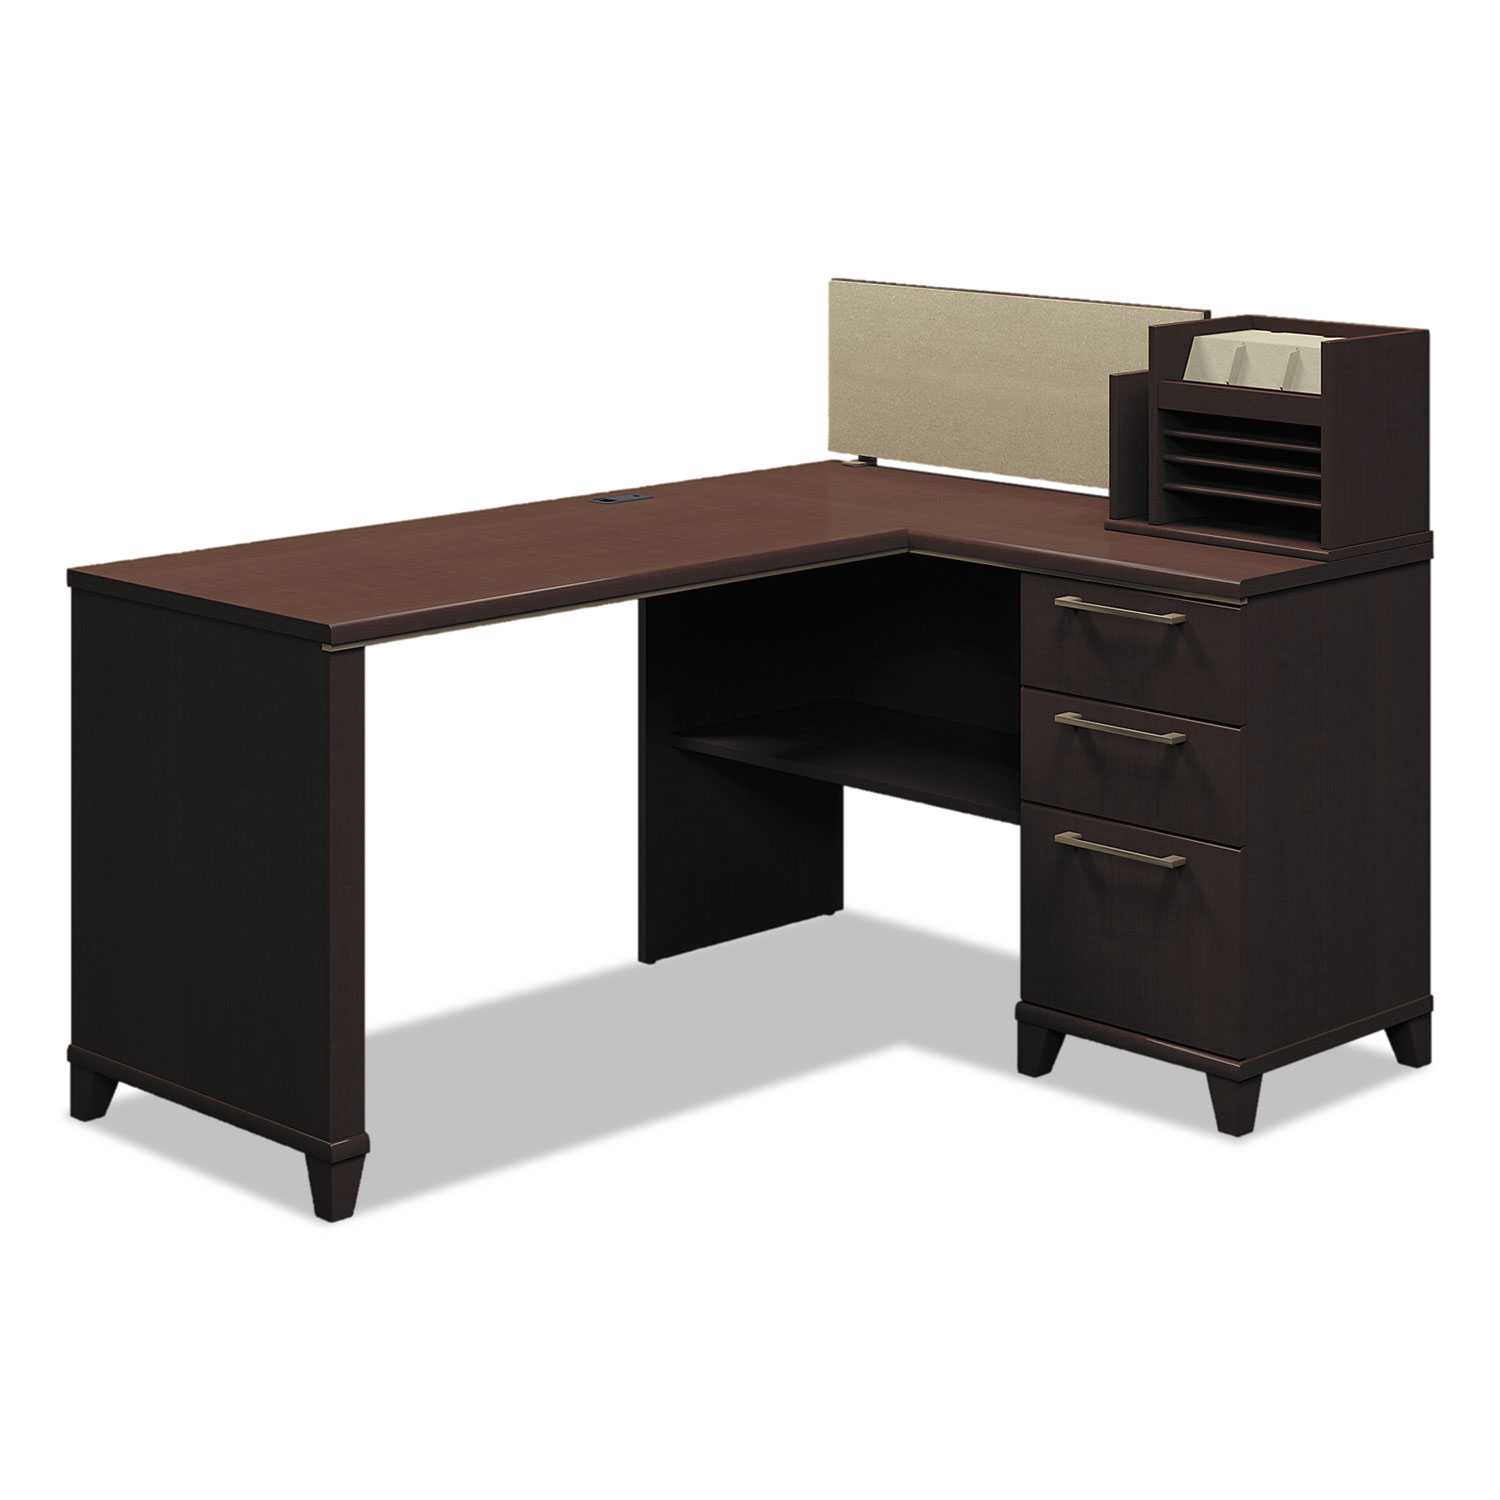 Enterprise Collection 60W x 47D Corner Desk, Mocha Cherry (Box 2 of 2)